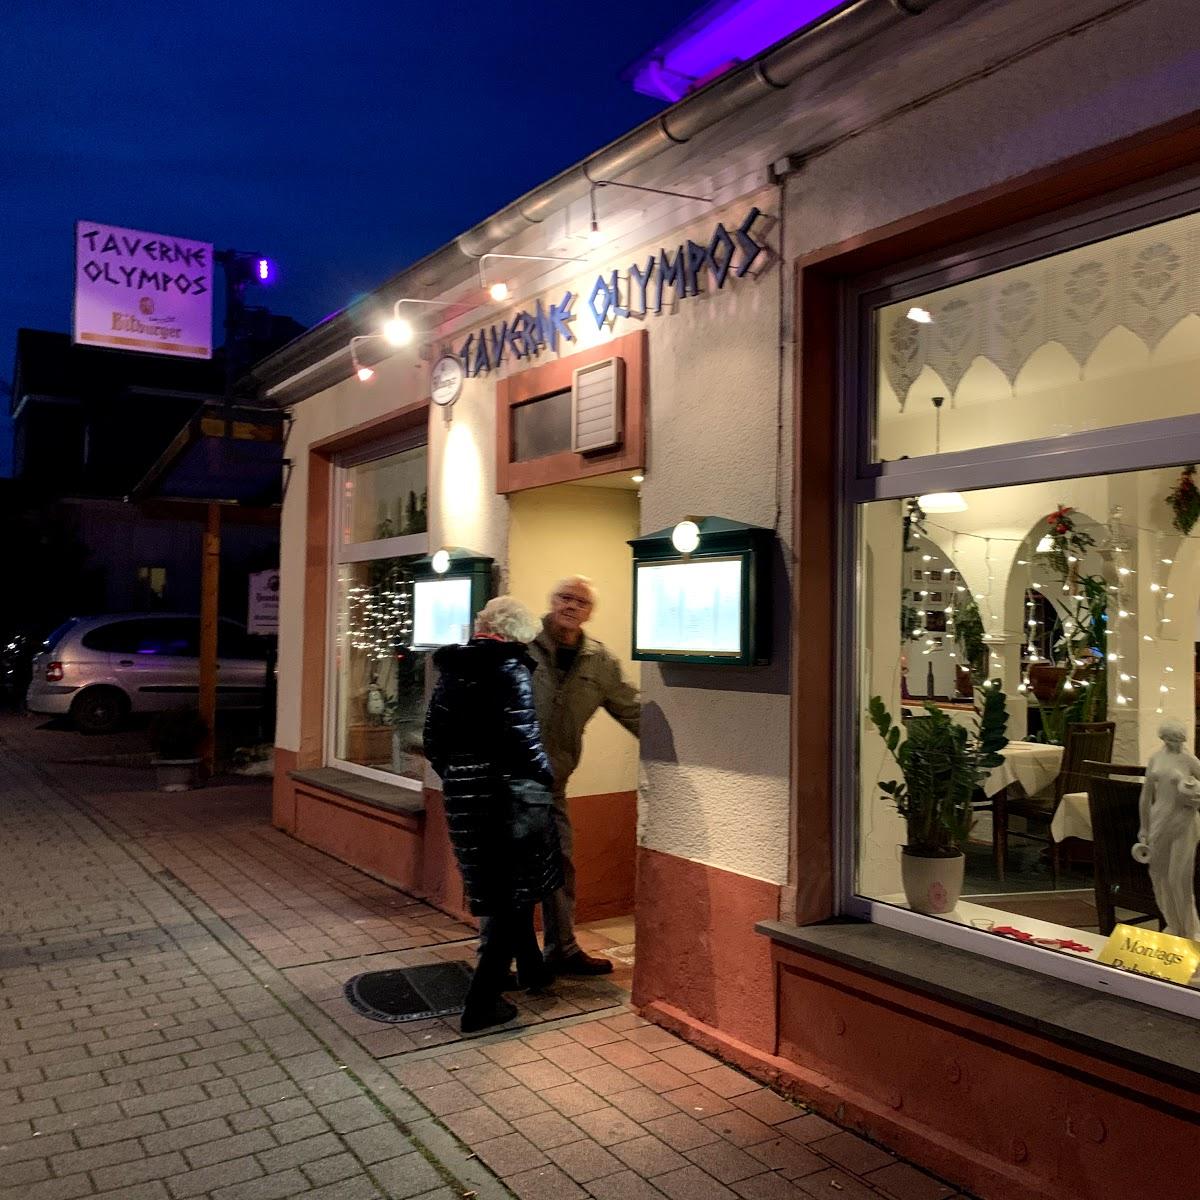 Restaurant "Taverne Olympos" in  Andernach